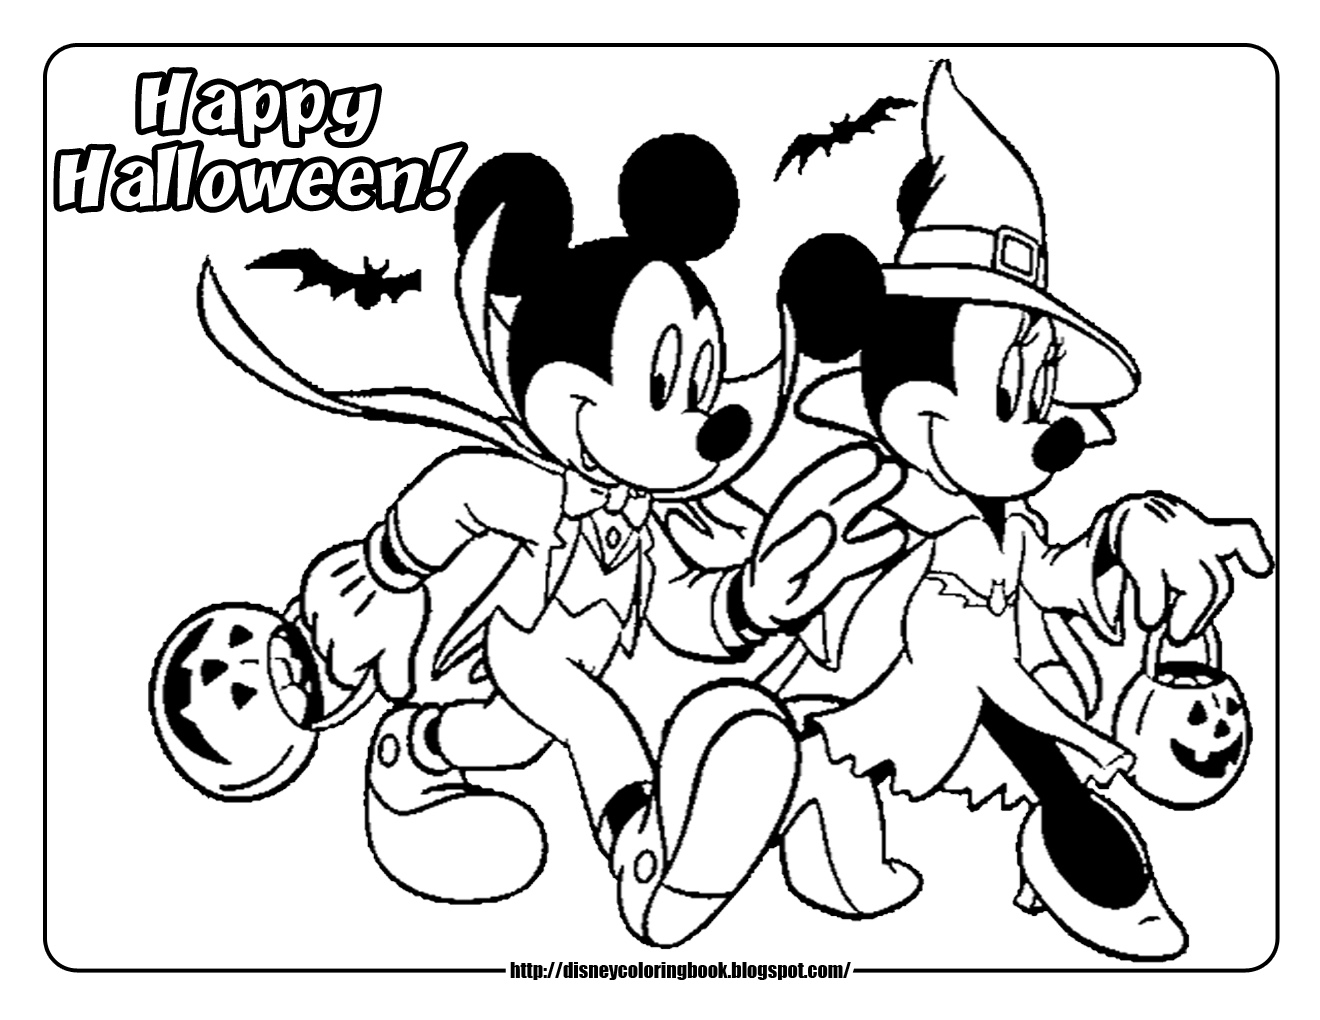 Mickey Mouse Halloween Costume